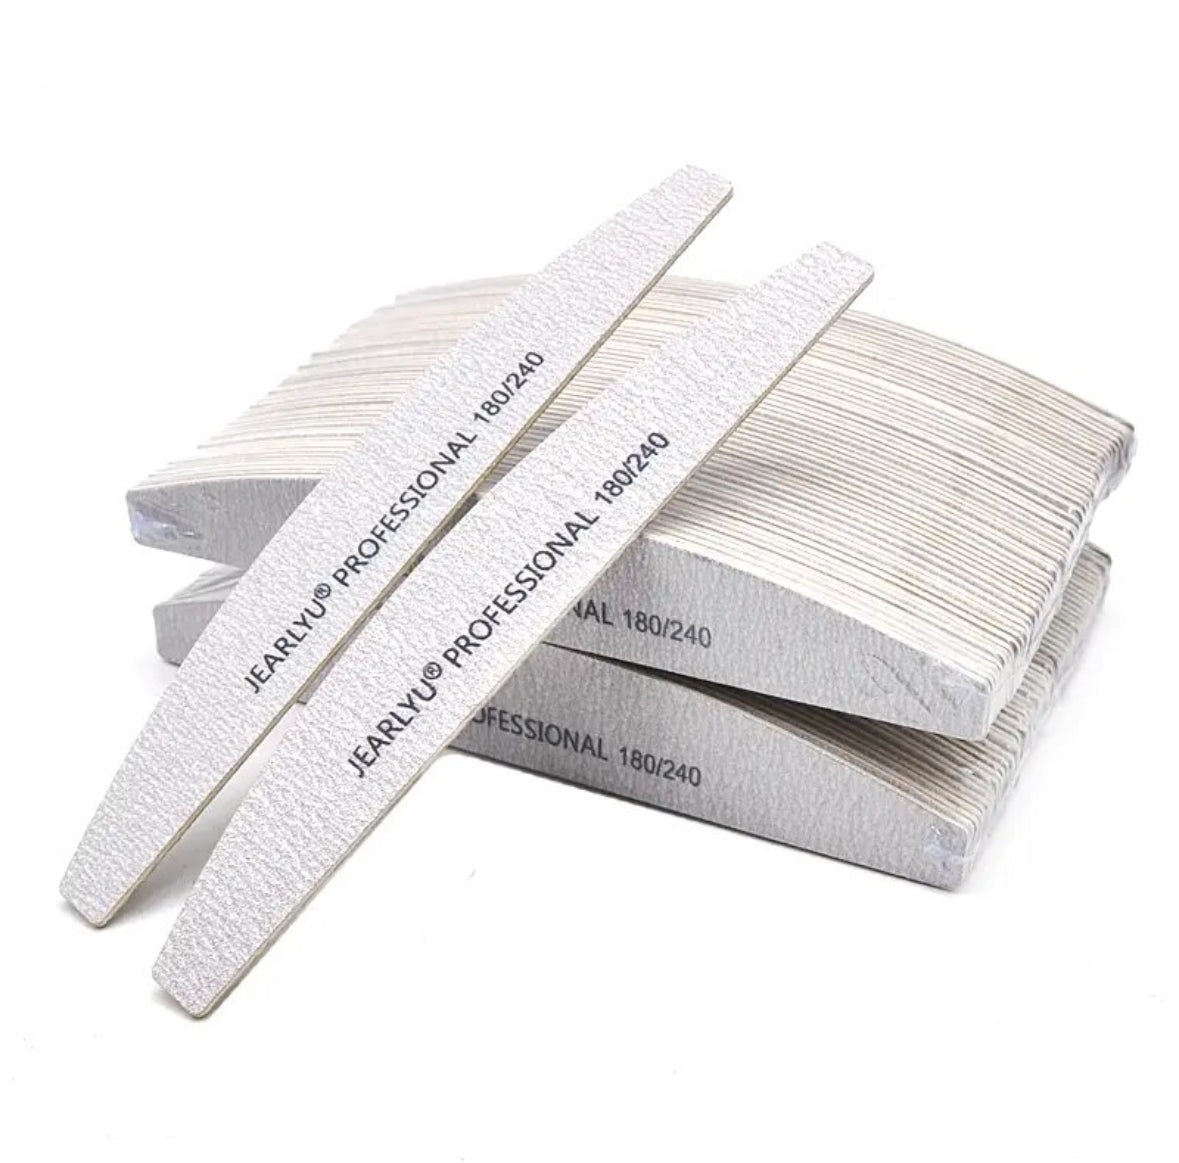 Disposable Wood Nail Files, 180/240 Grit, 50pcs